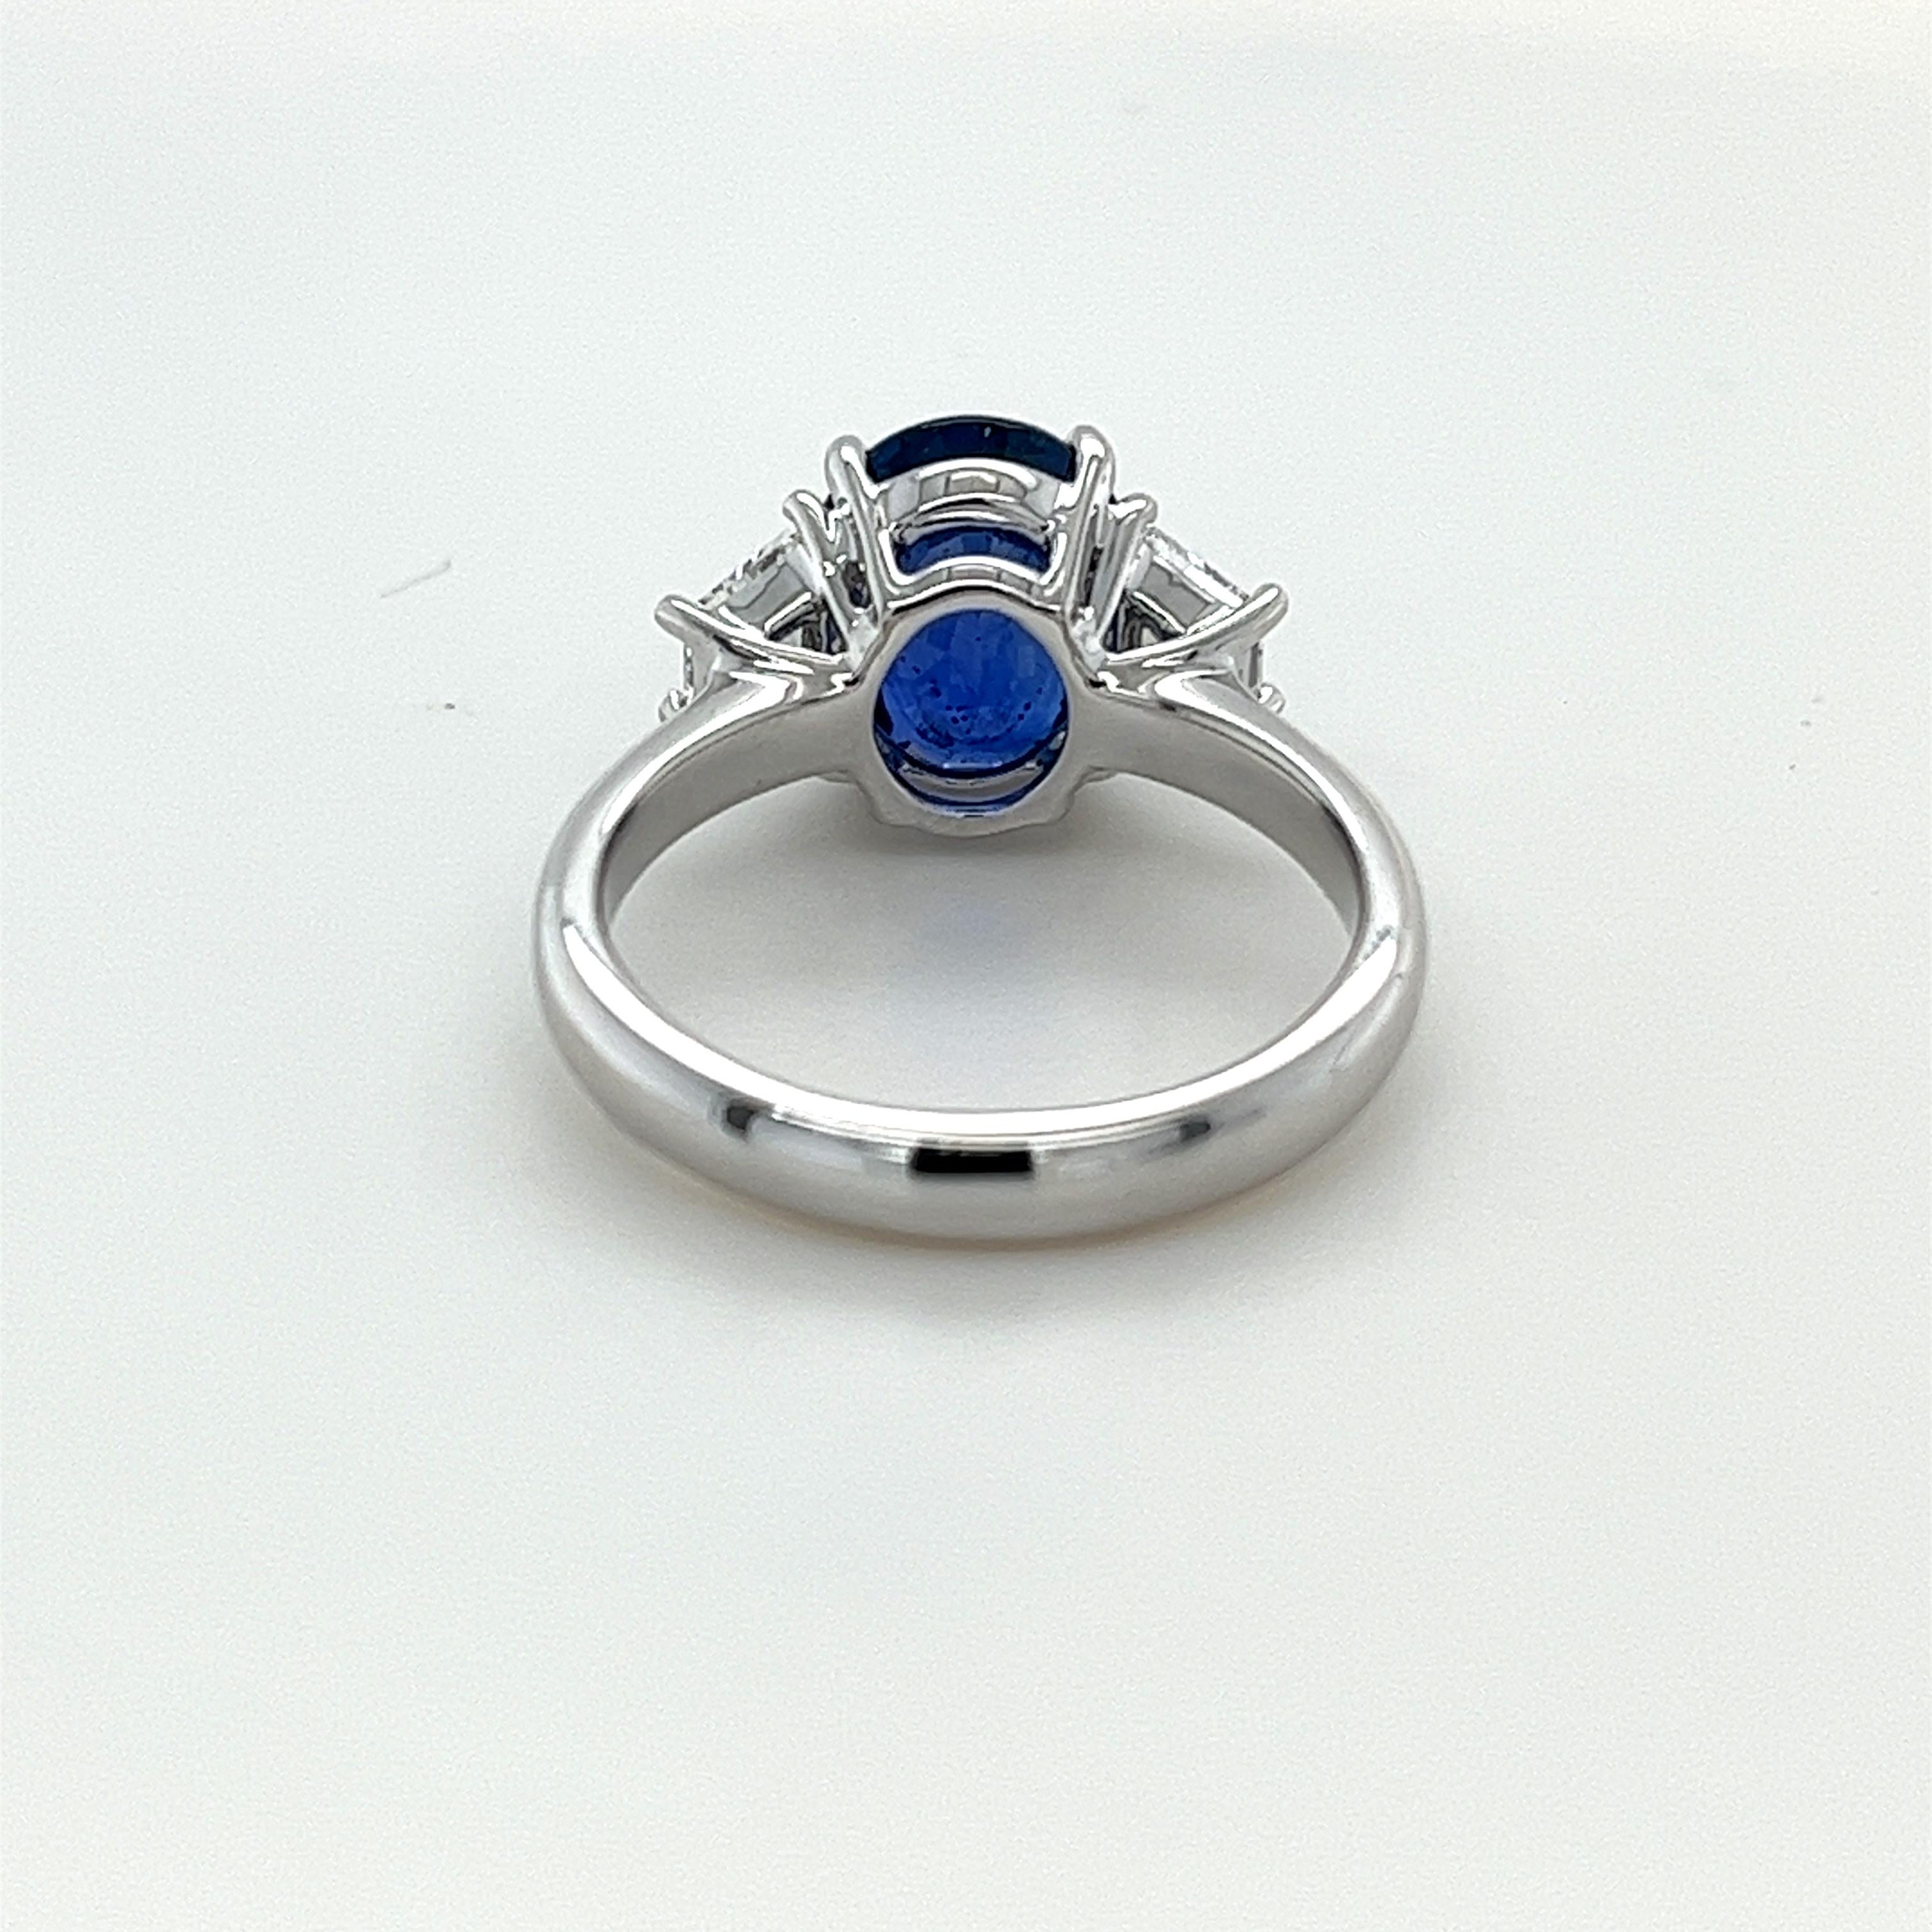 Oval Cut 3.52 Carat Ceylon Sapphire & Diamond Ring in Platinum For Sale